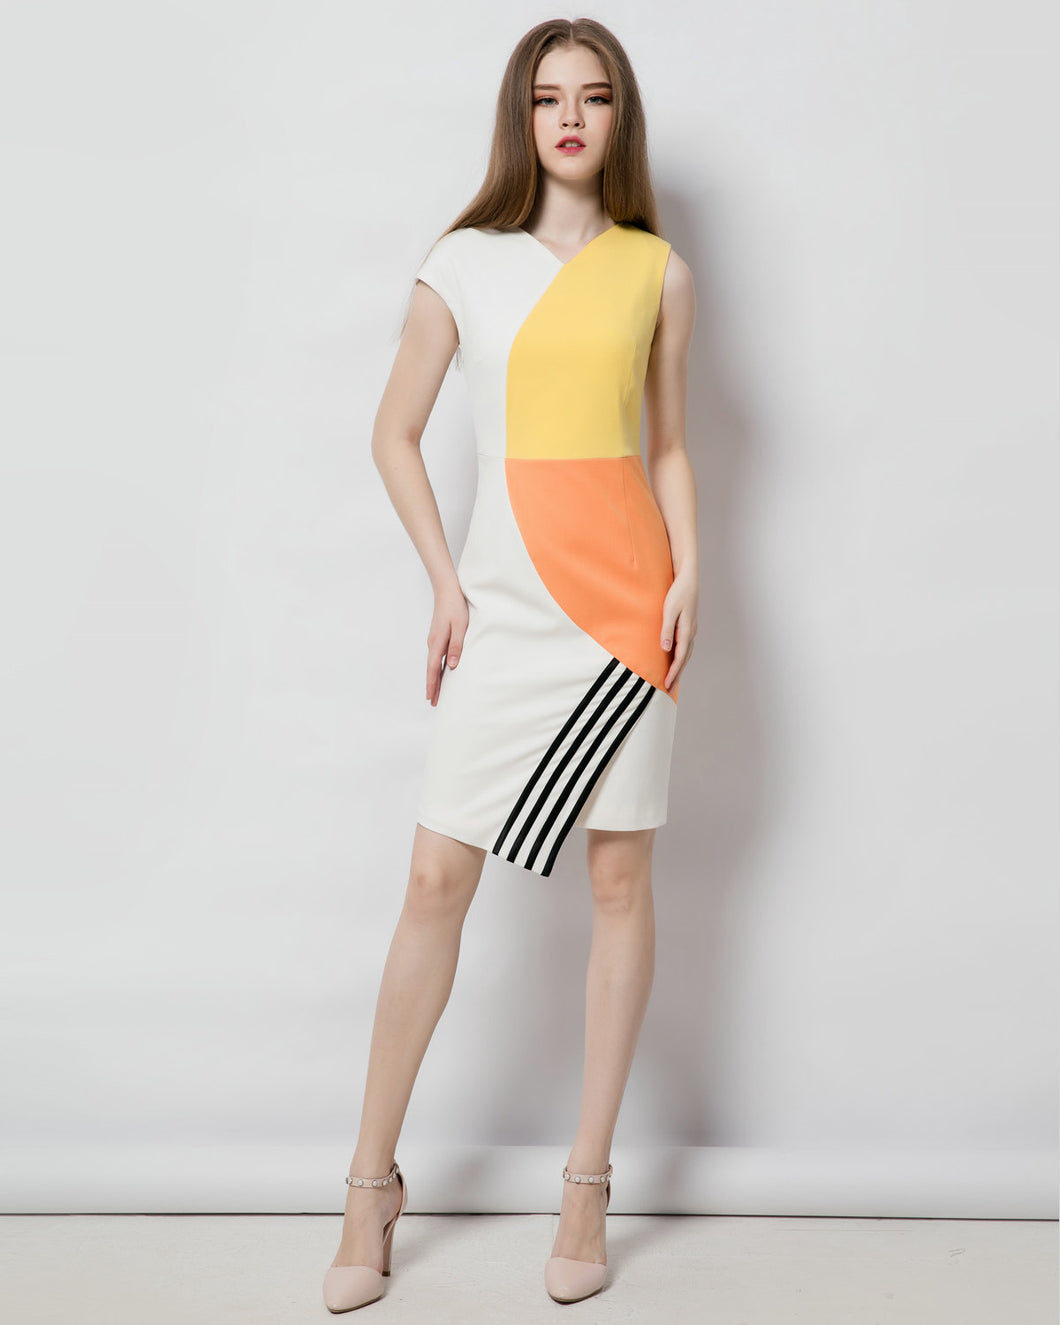 Colorblock elegant  Geometric dress  Asymmetrical dress Wrap dress Modern dress